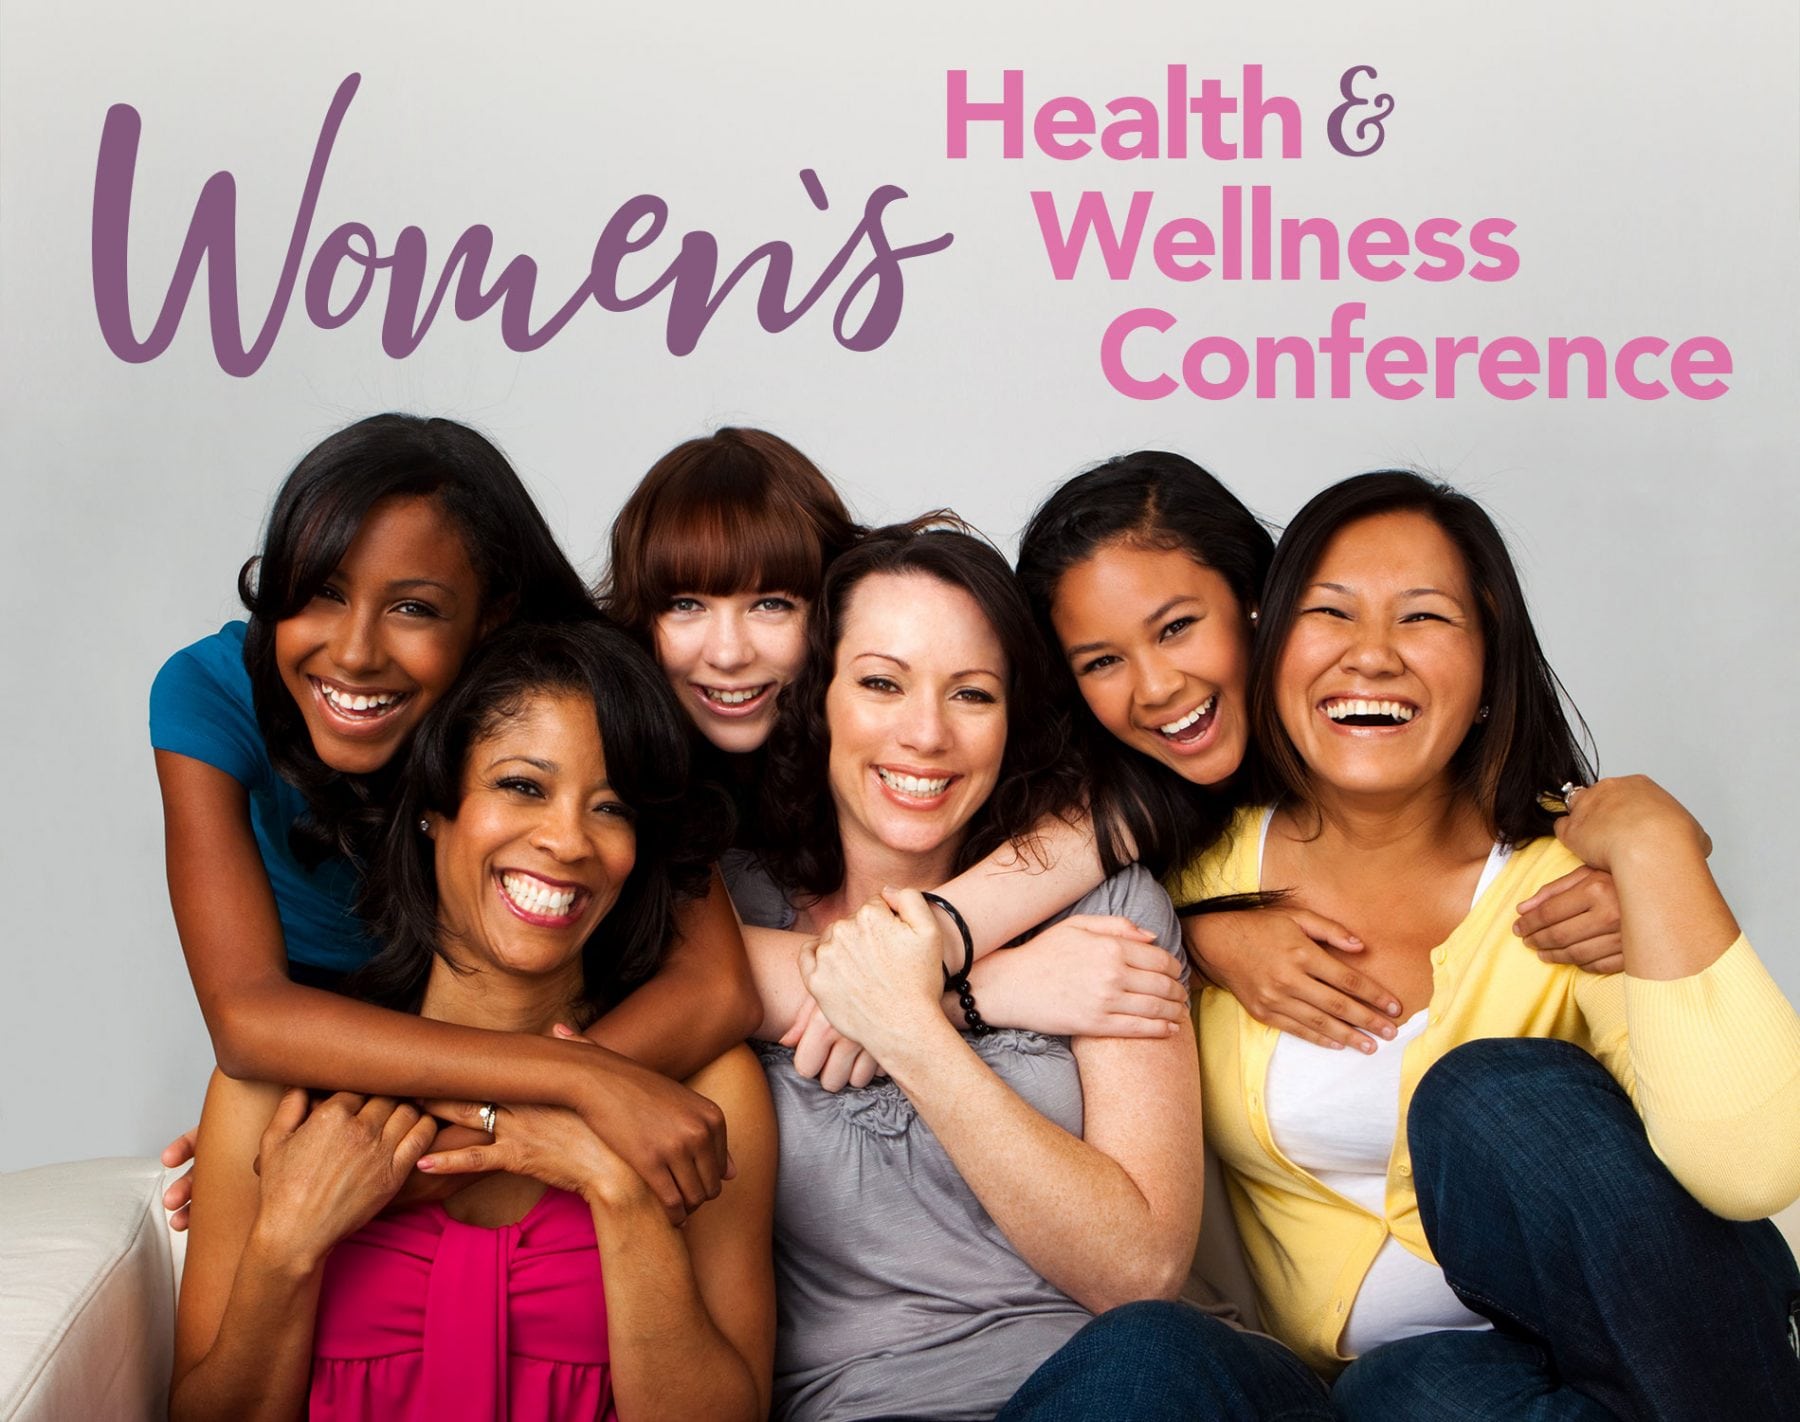 Women’s Health & Wellness Conference - Camarena Health